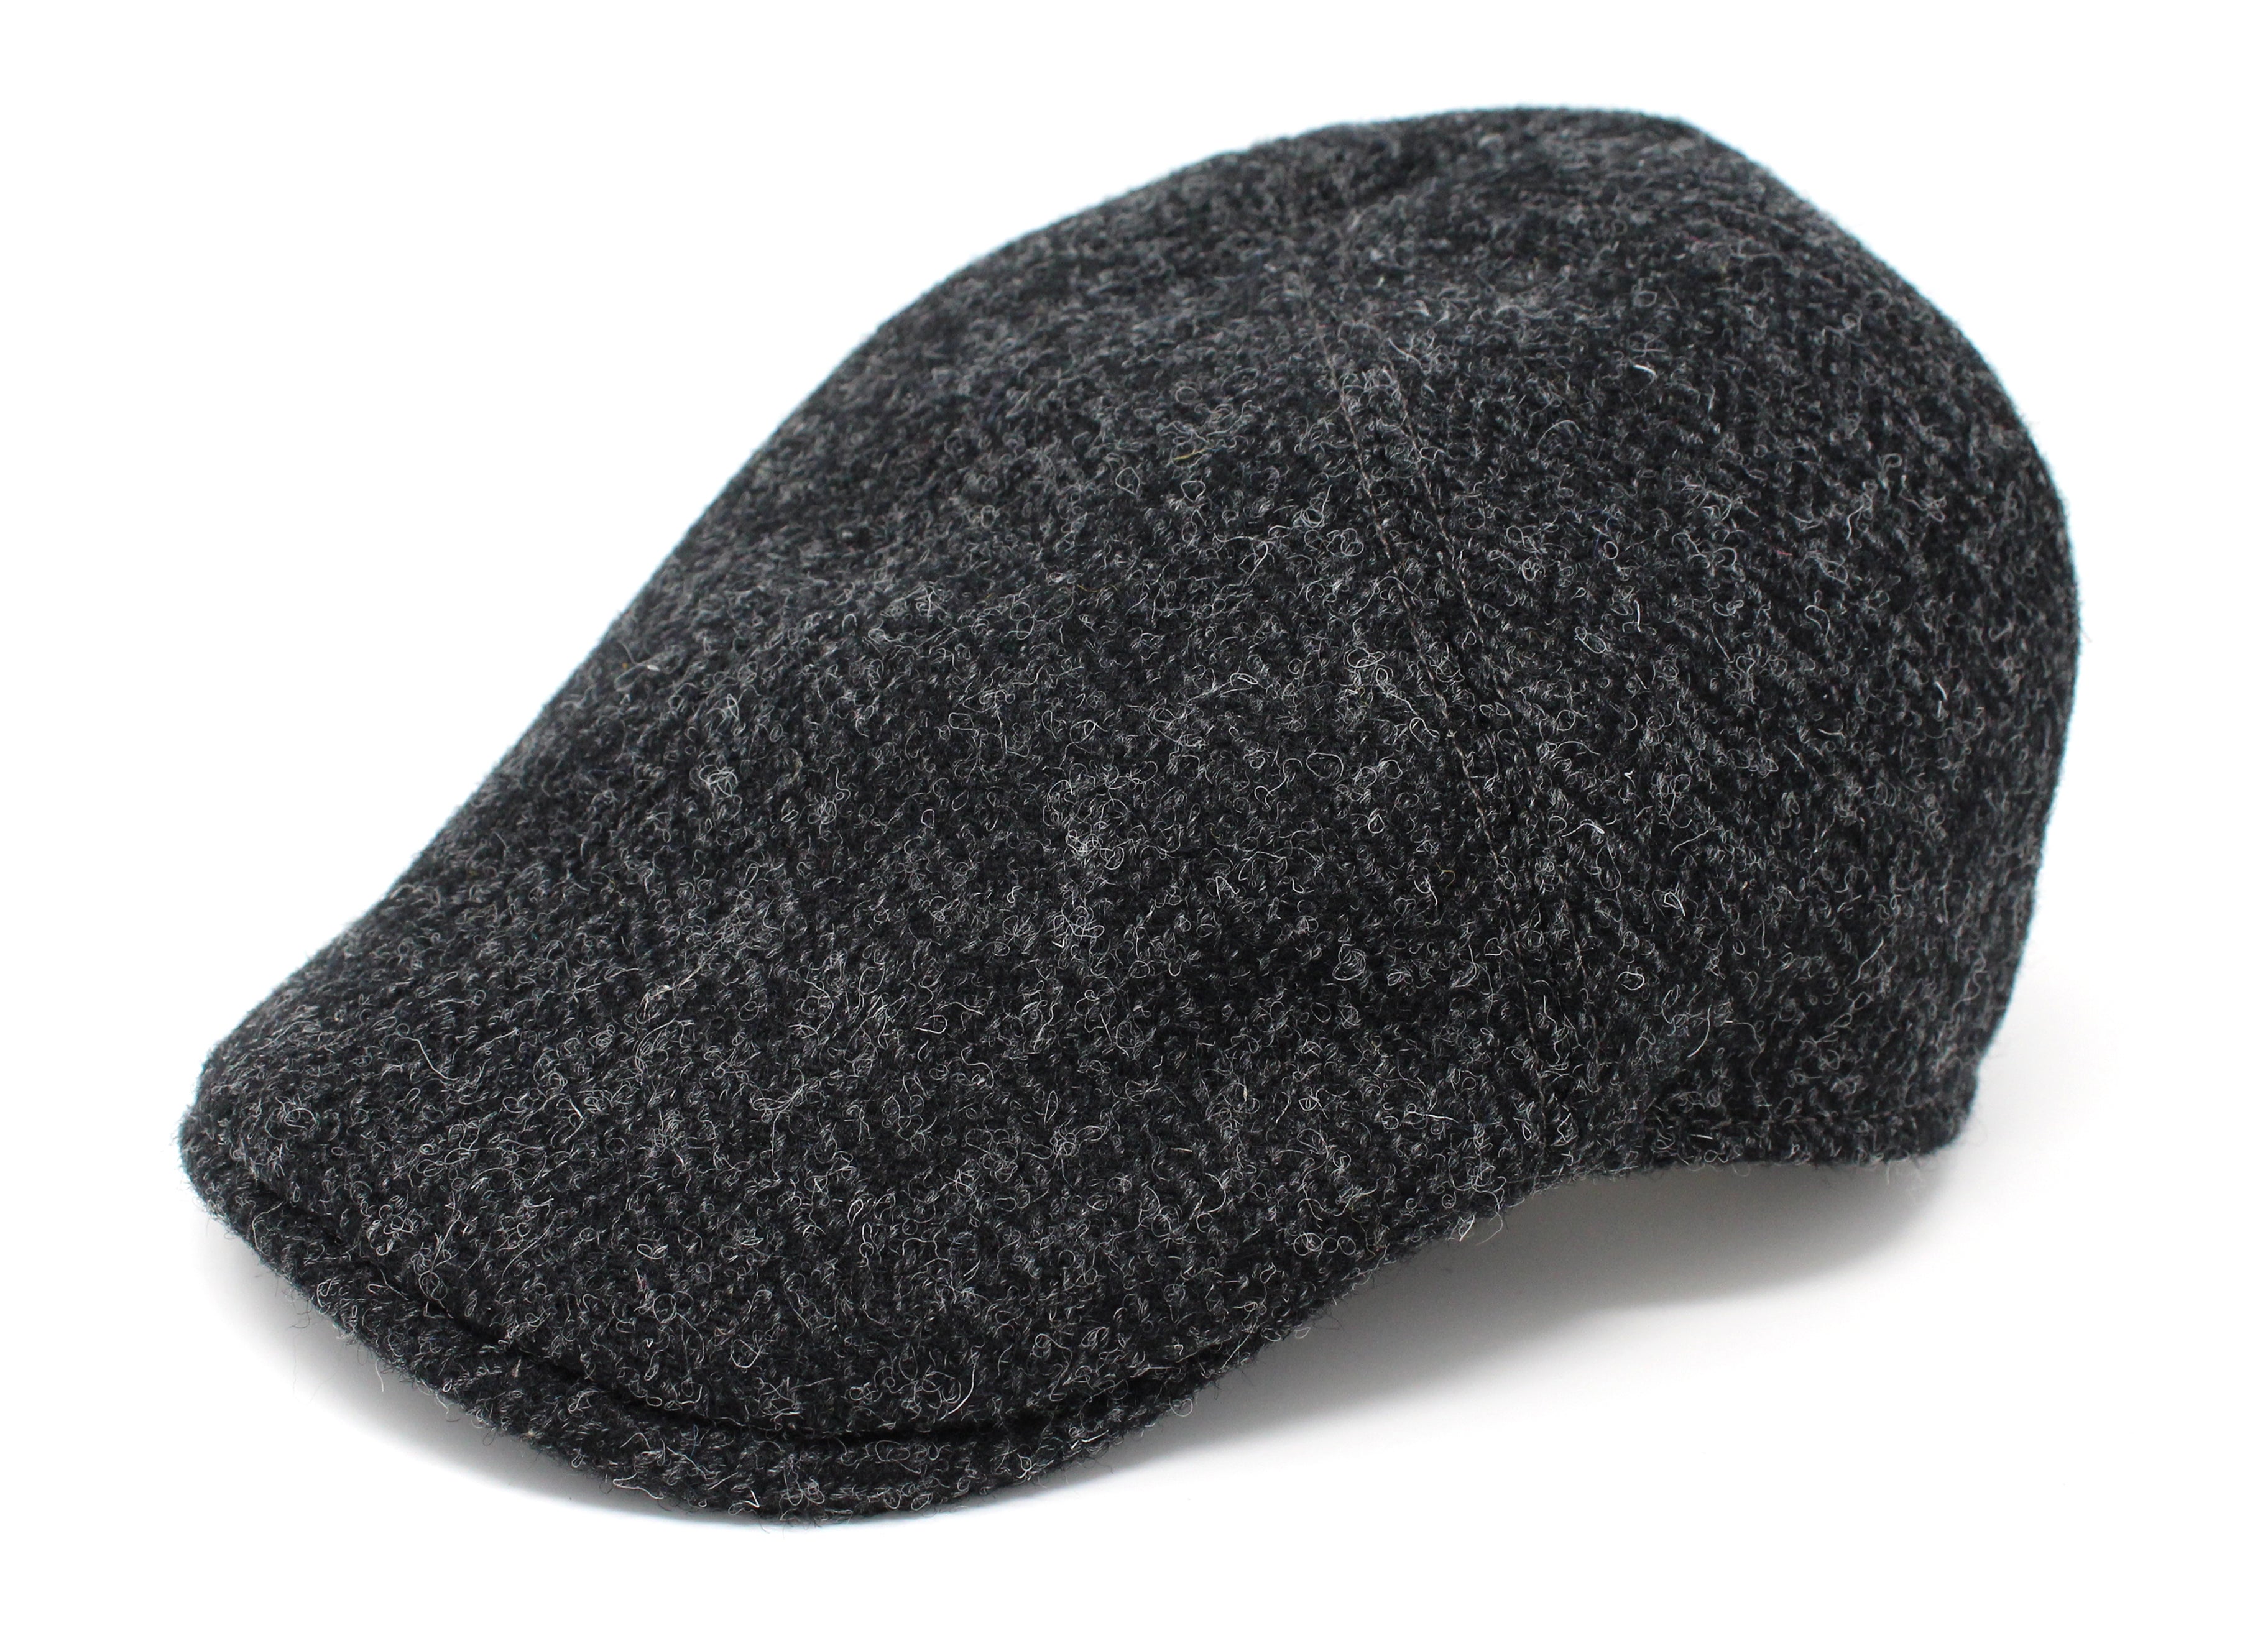 Hanna Hats Erin Cap Tweed - Black and Charcoal Herringbone - Harris Scottish Tweed